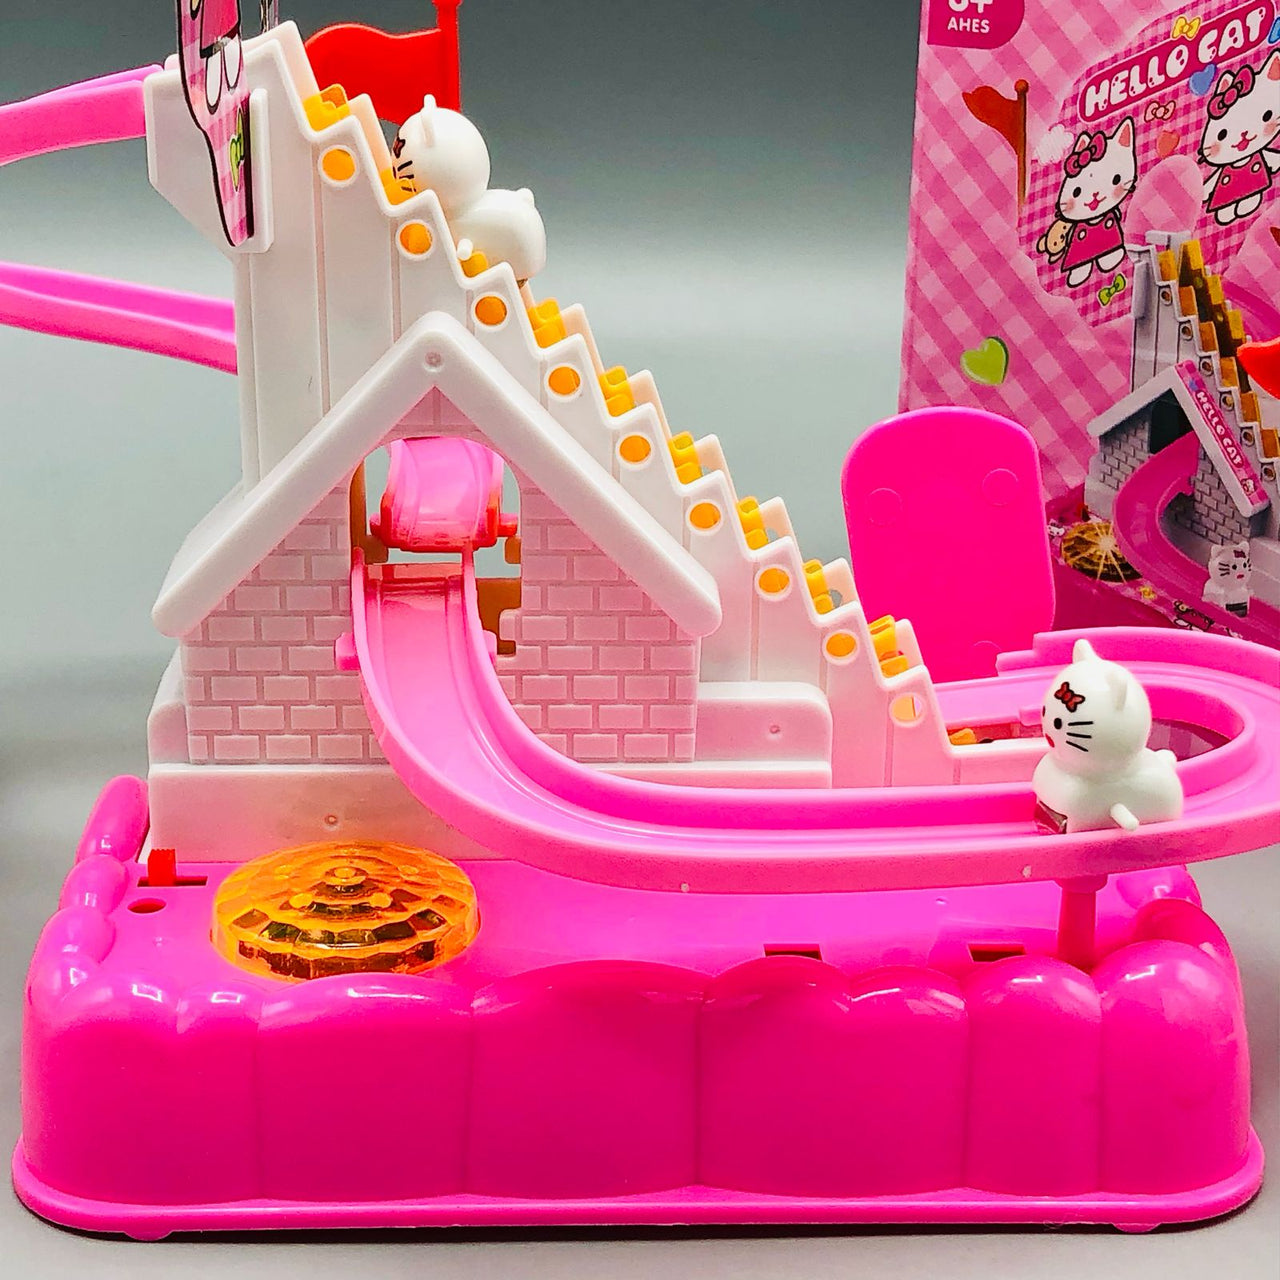 Hello Kitty Racing Slide Track Set